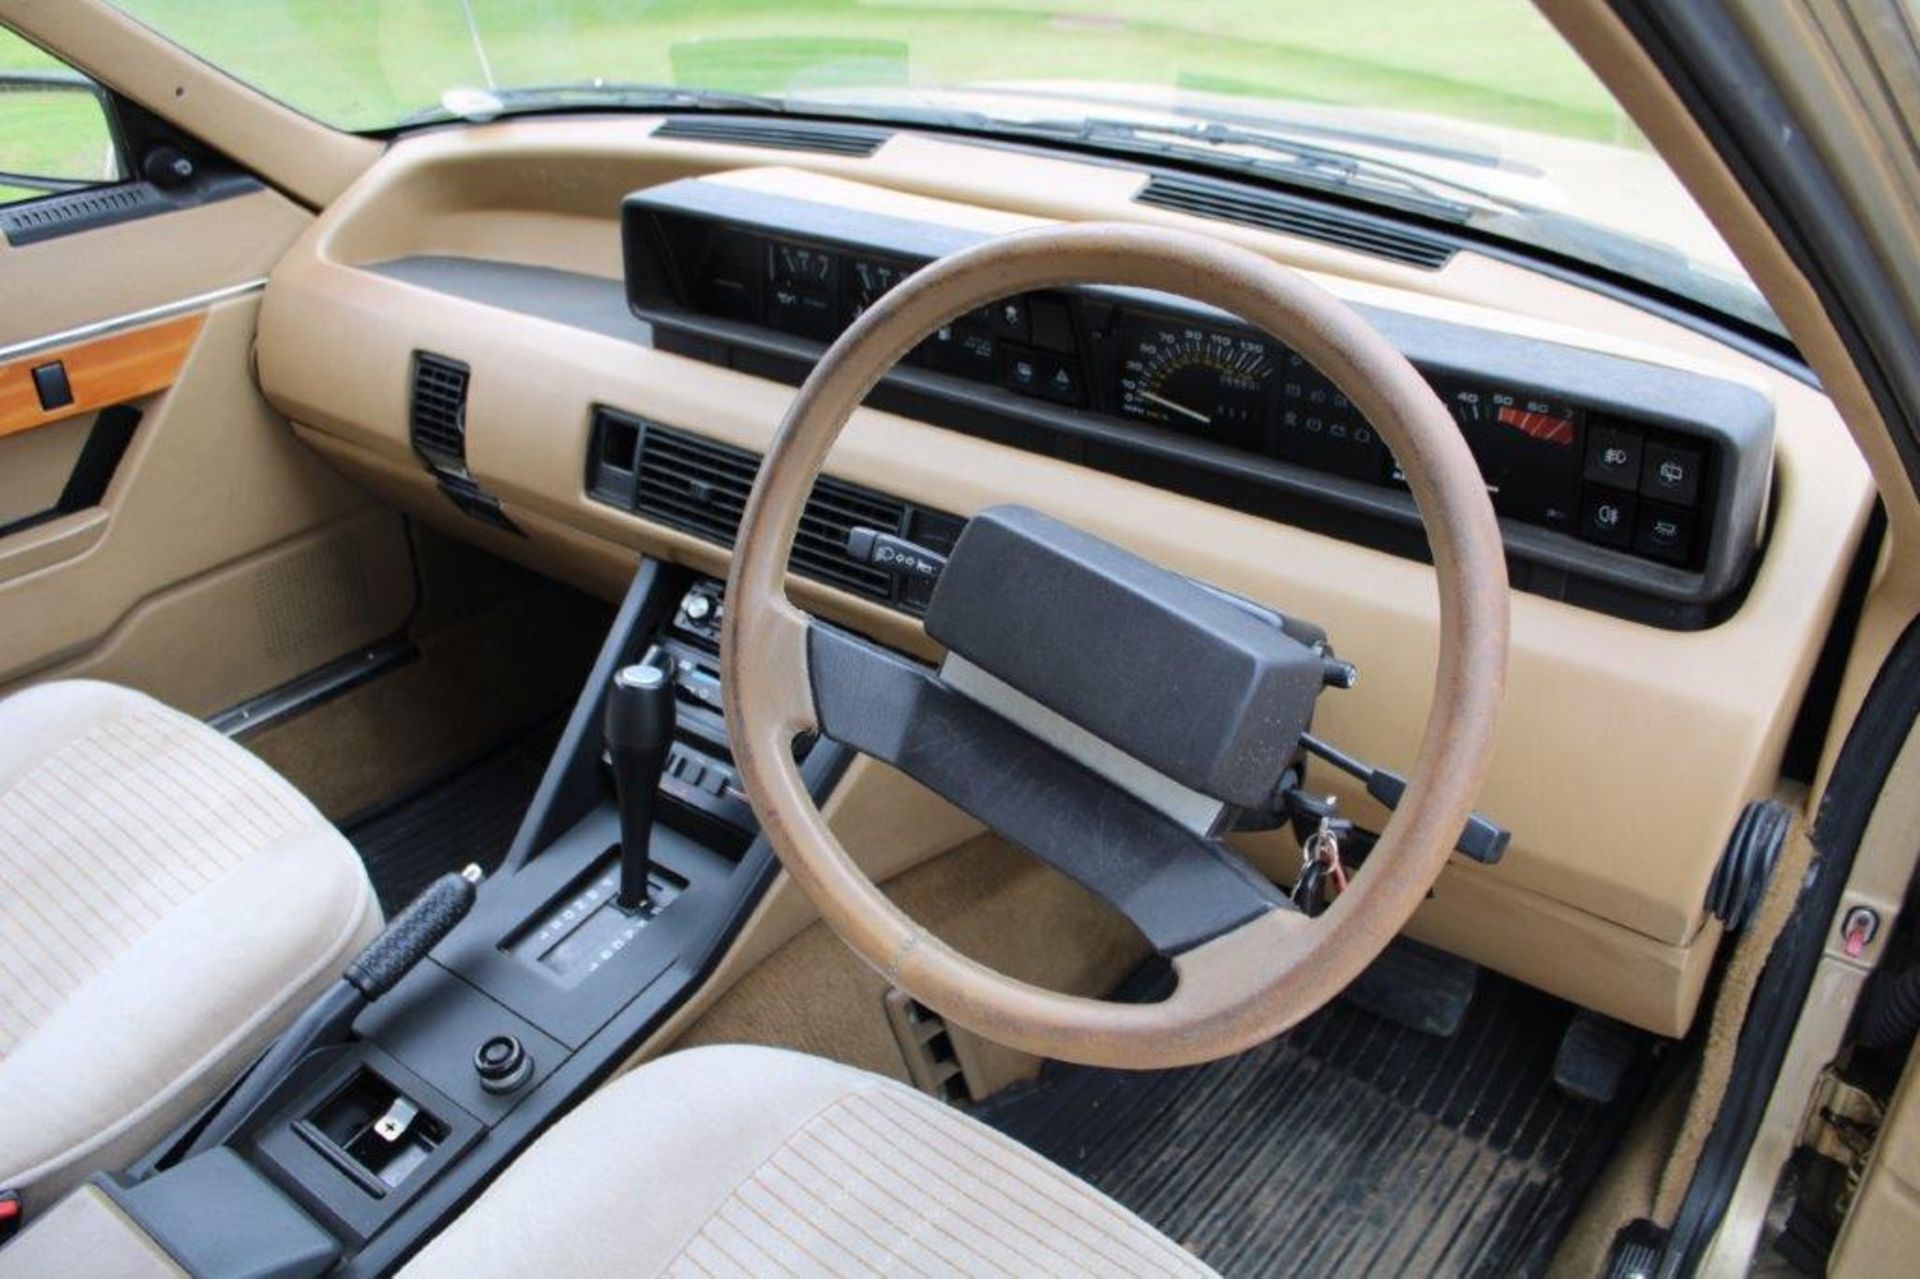 1982 Rover SD1 2600 S Auto - Image 8 of 23